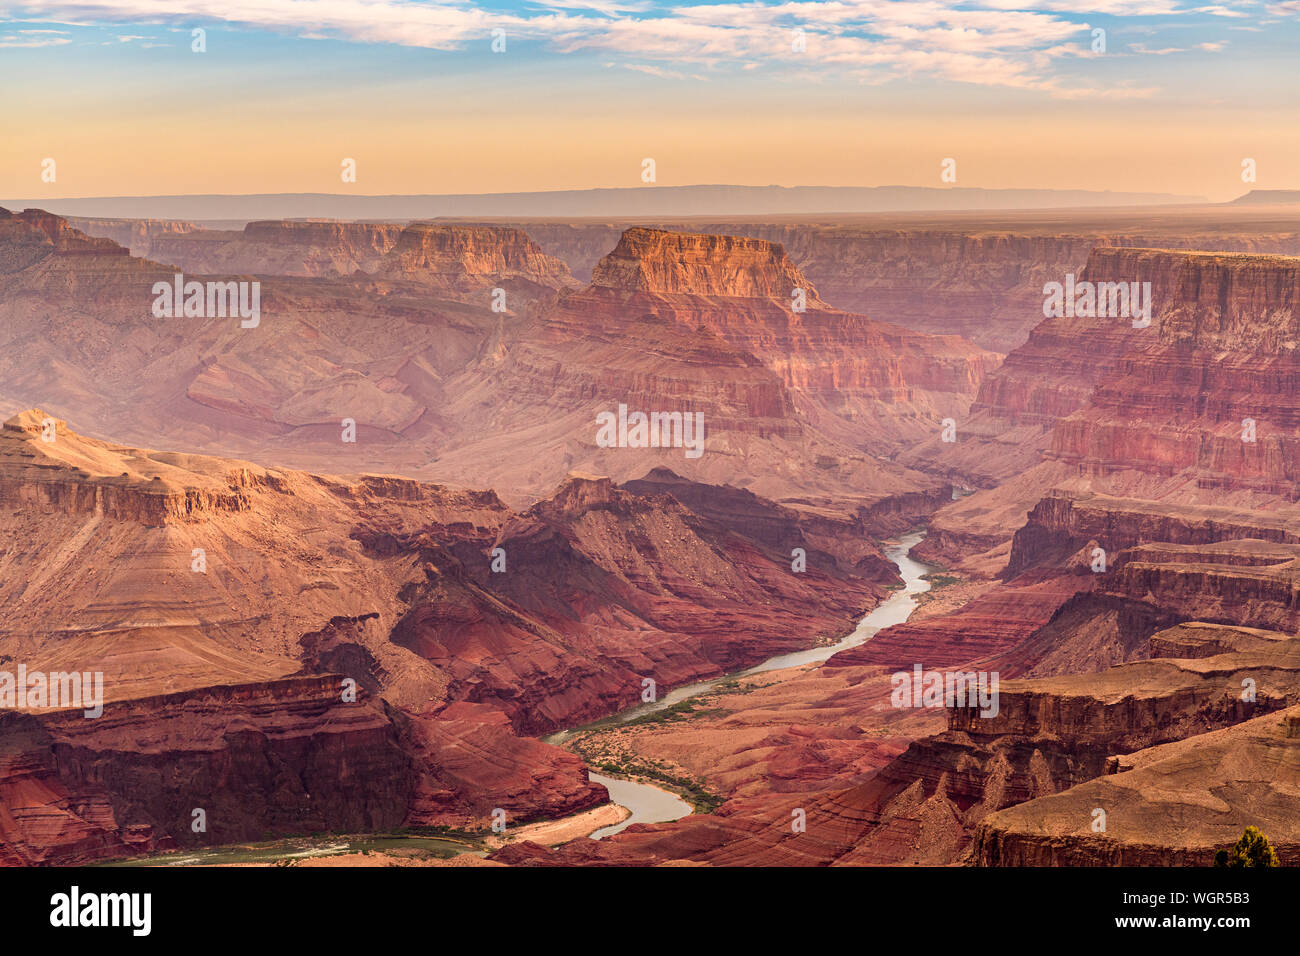 Grand Canyon, Arizona, USA with the Colorado River below. Stock Photo